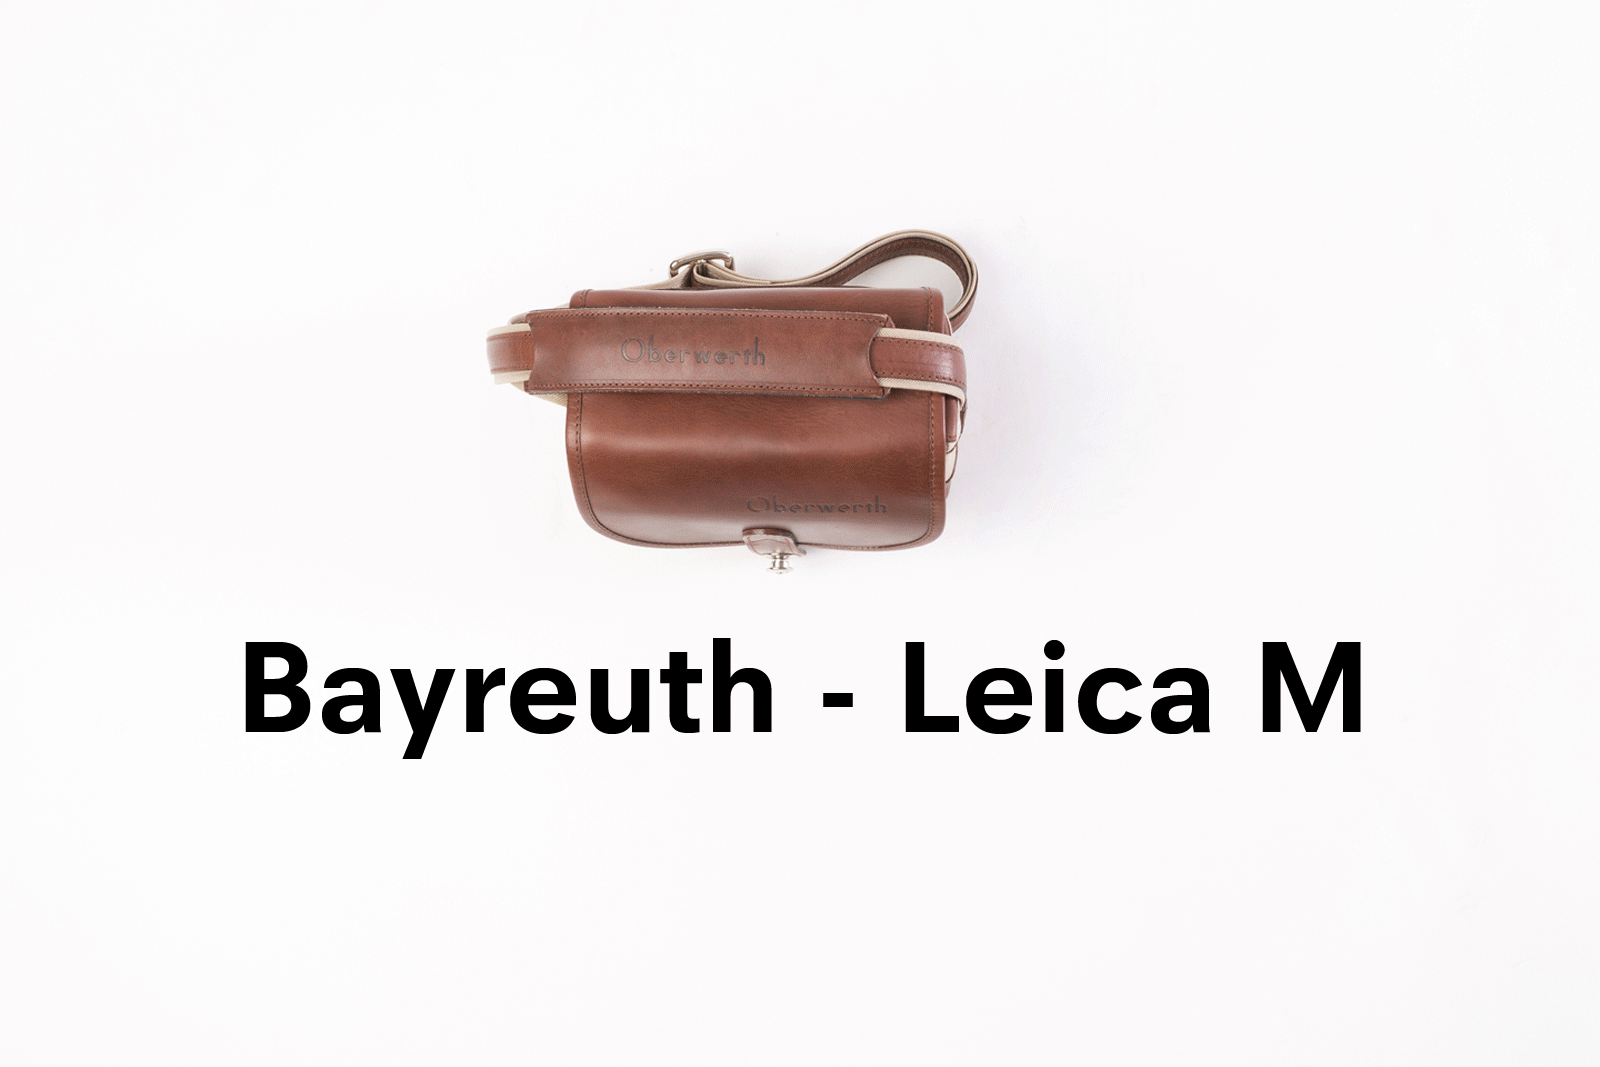 Camera bag BAYREUTH full leather